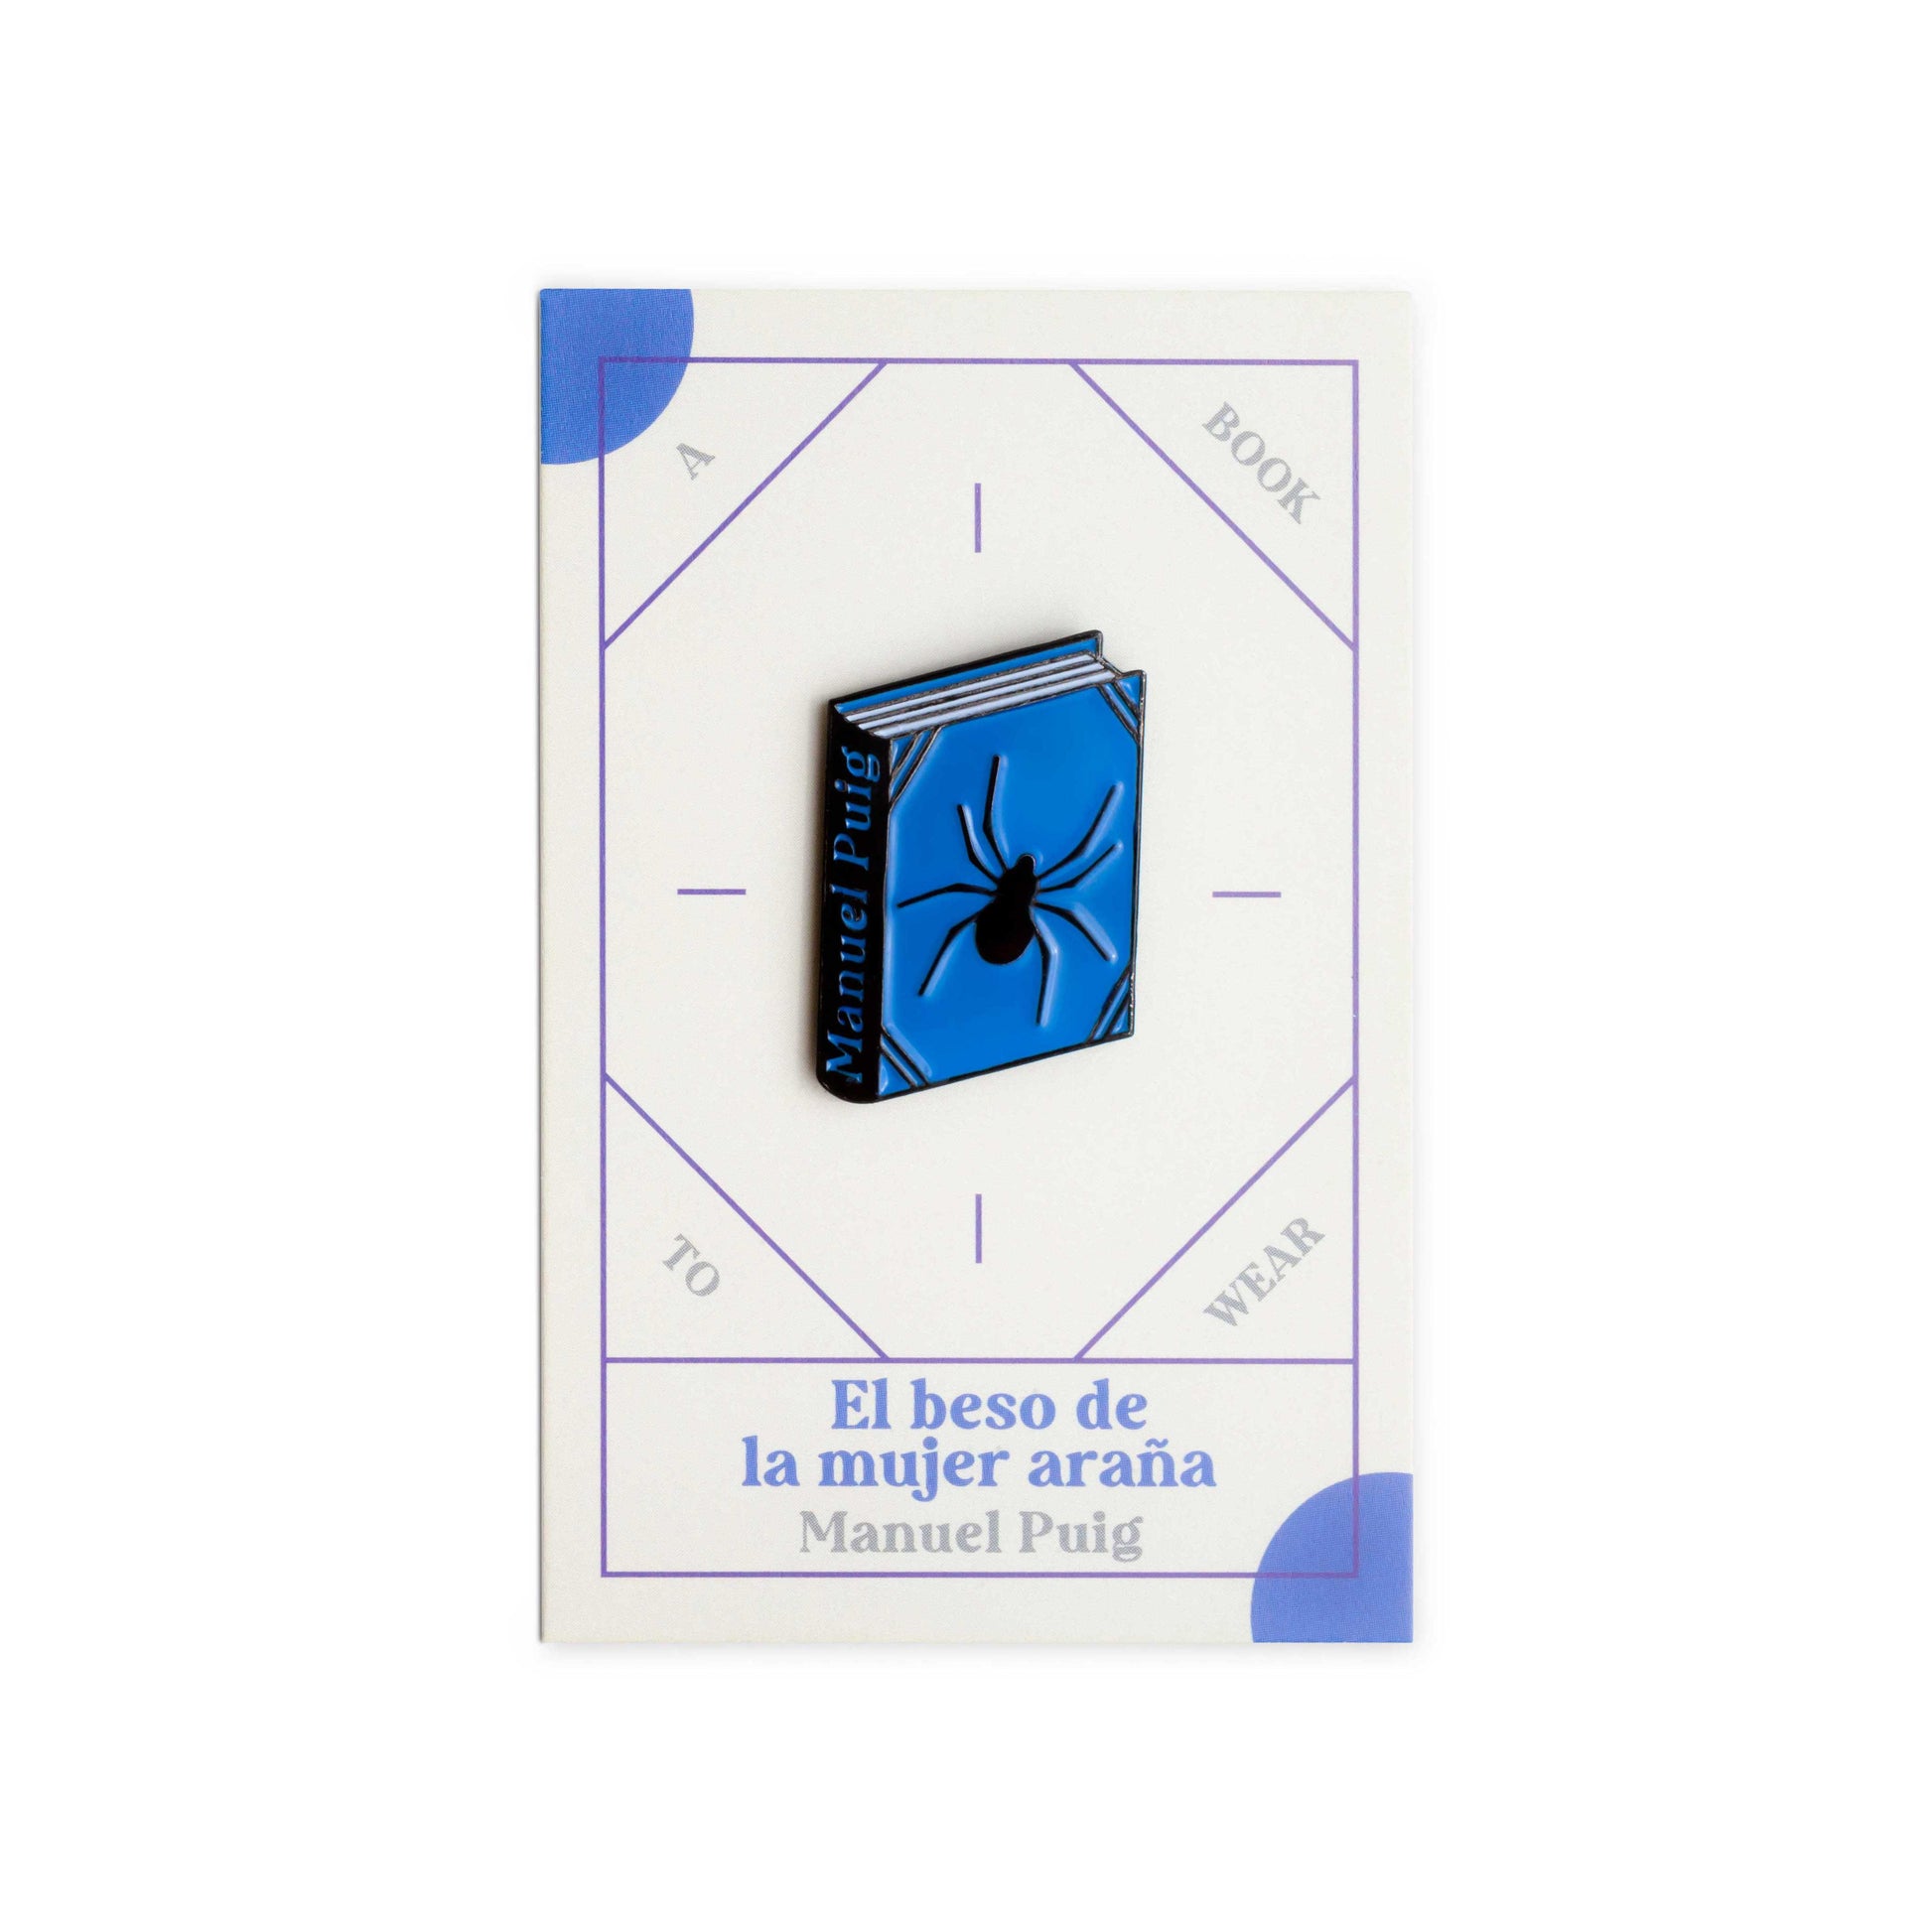 El beso de la mujer araña Book by Manuel Puig Enamel Pin by Judy Kaufmann with packaging